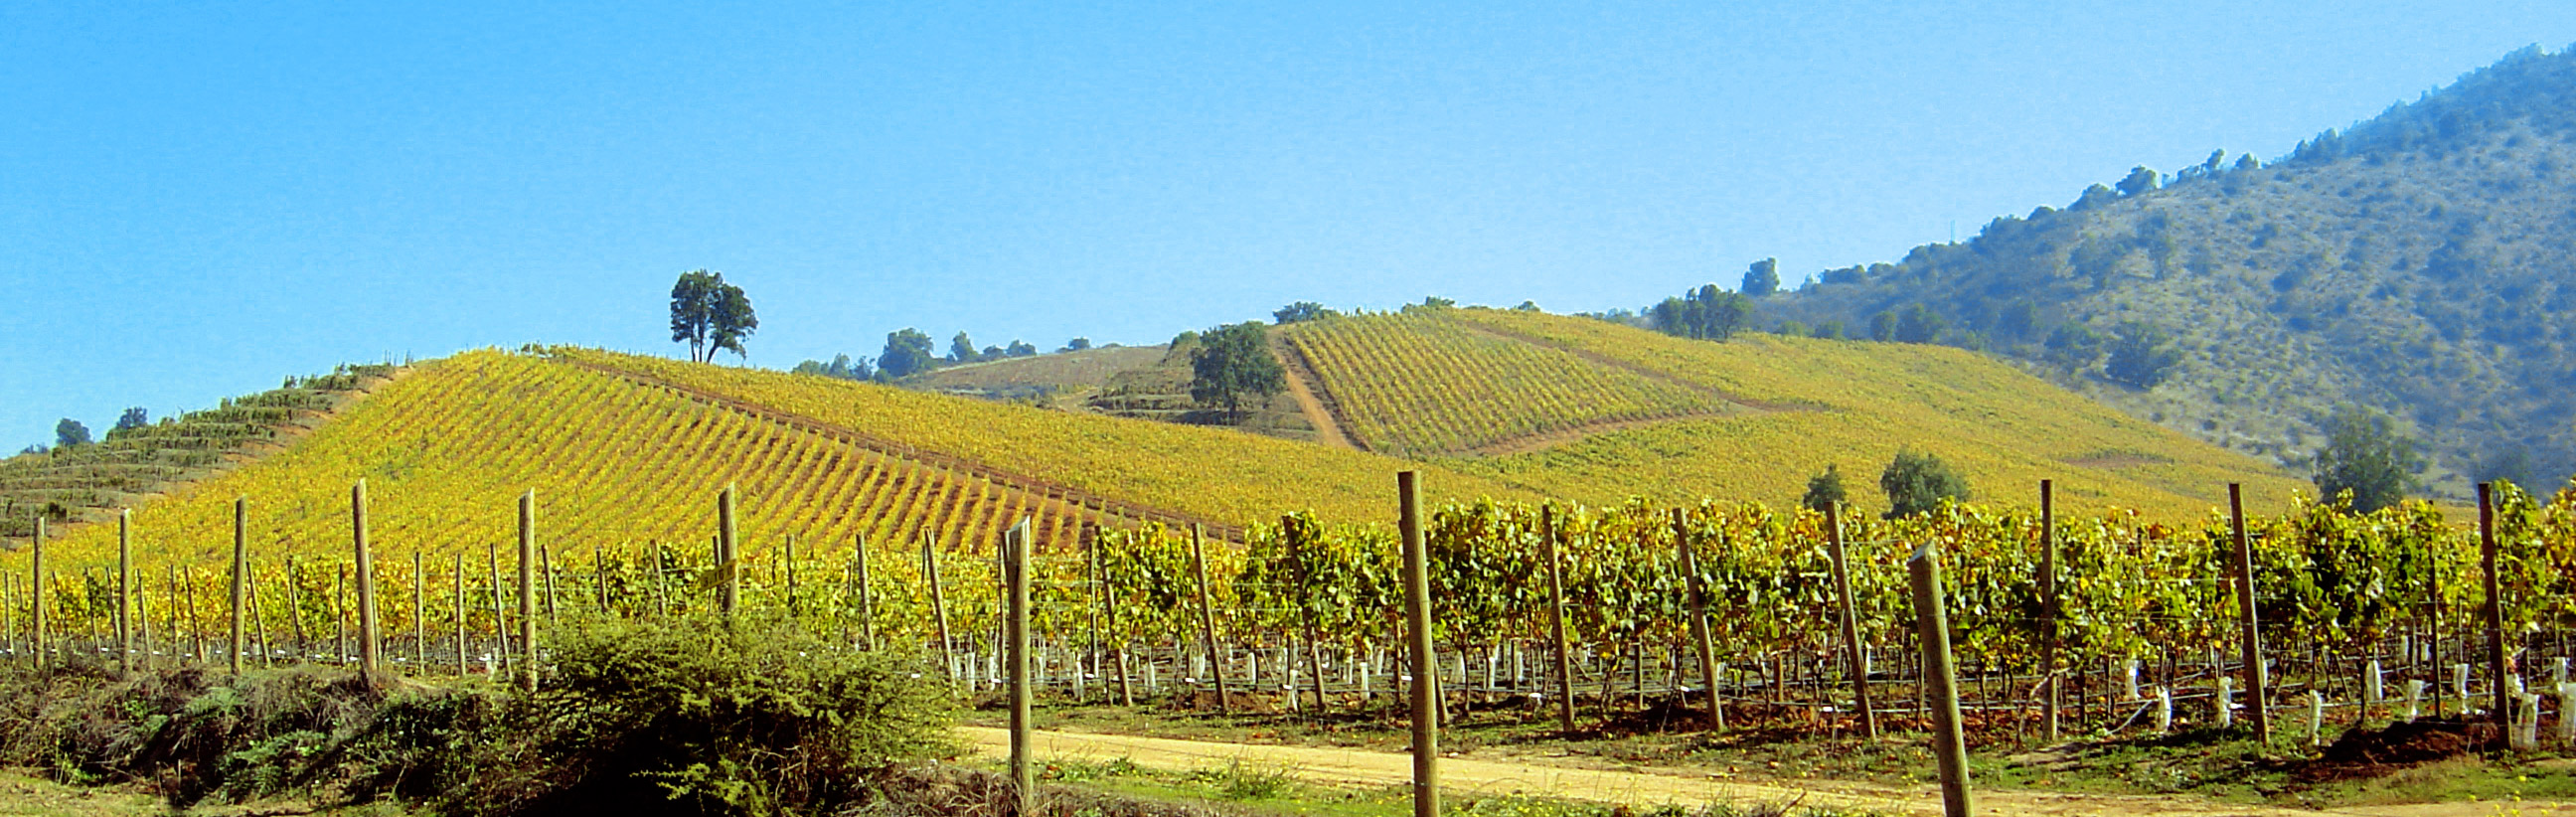 CHILE_chardonnay-vineyards-1513203